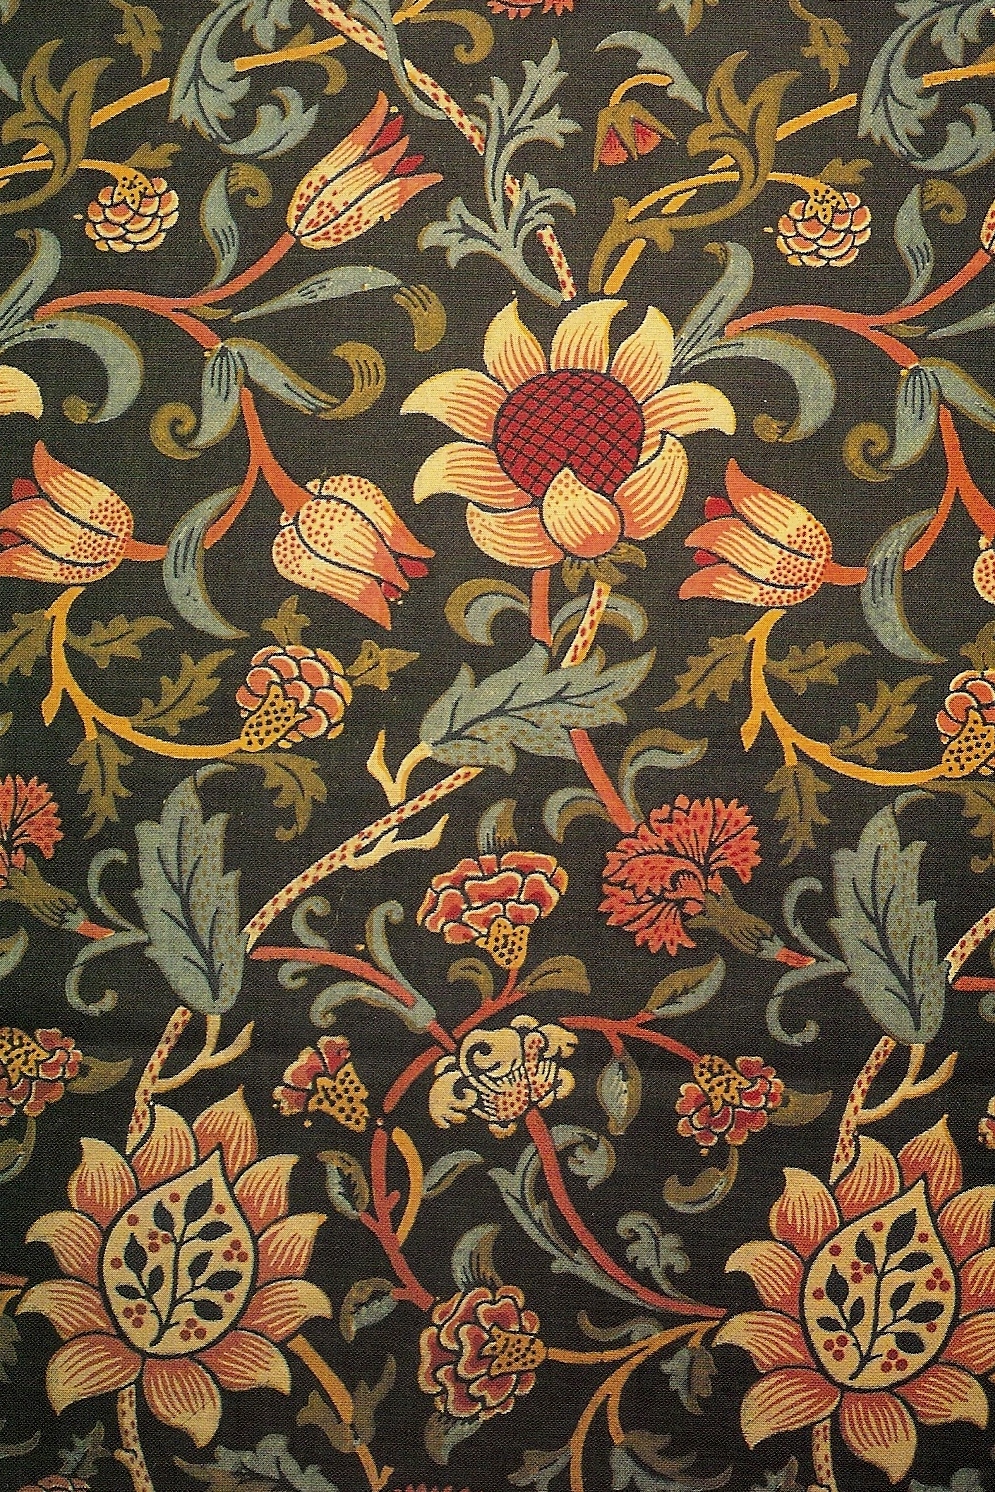 william morris style wallpaper,pattern,brown,orange,floral design,textile